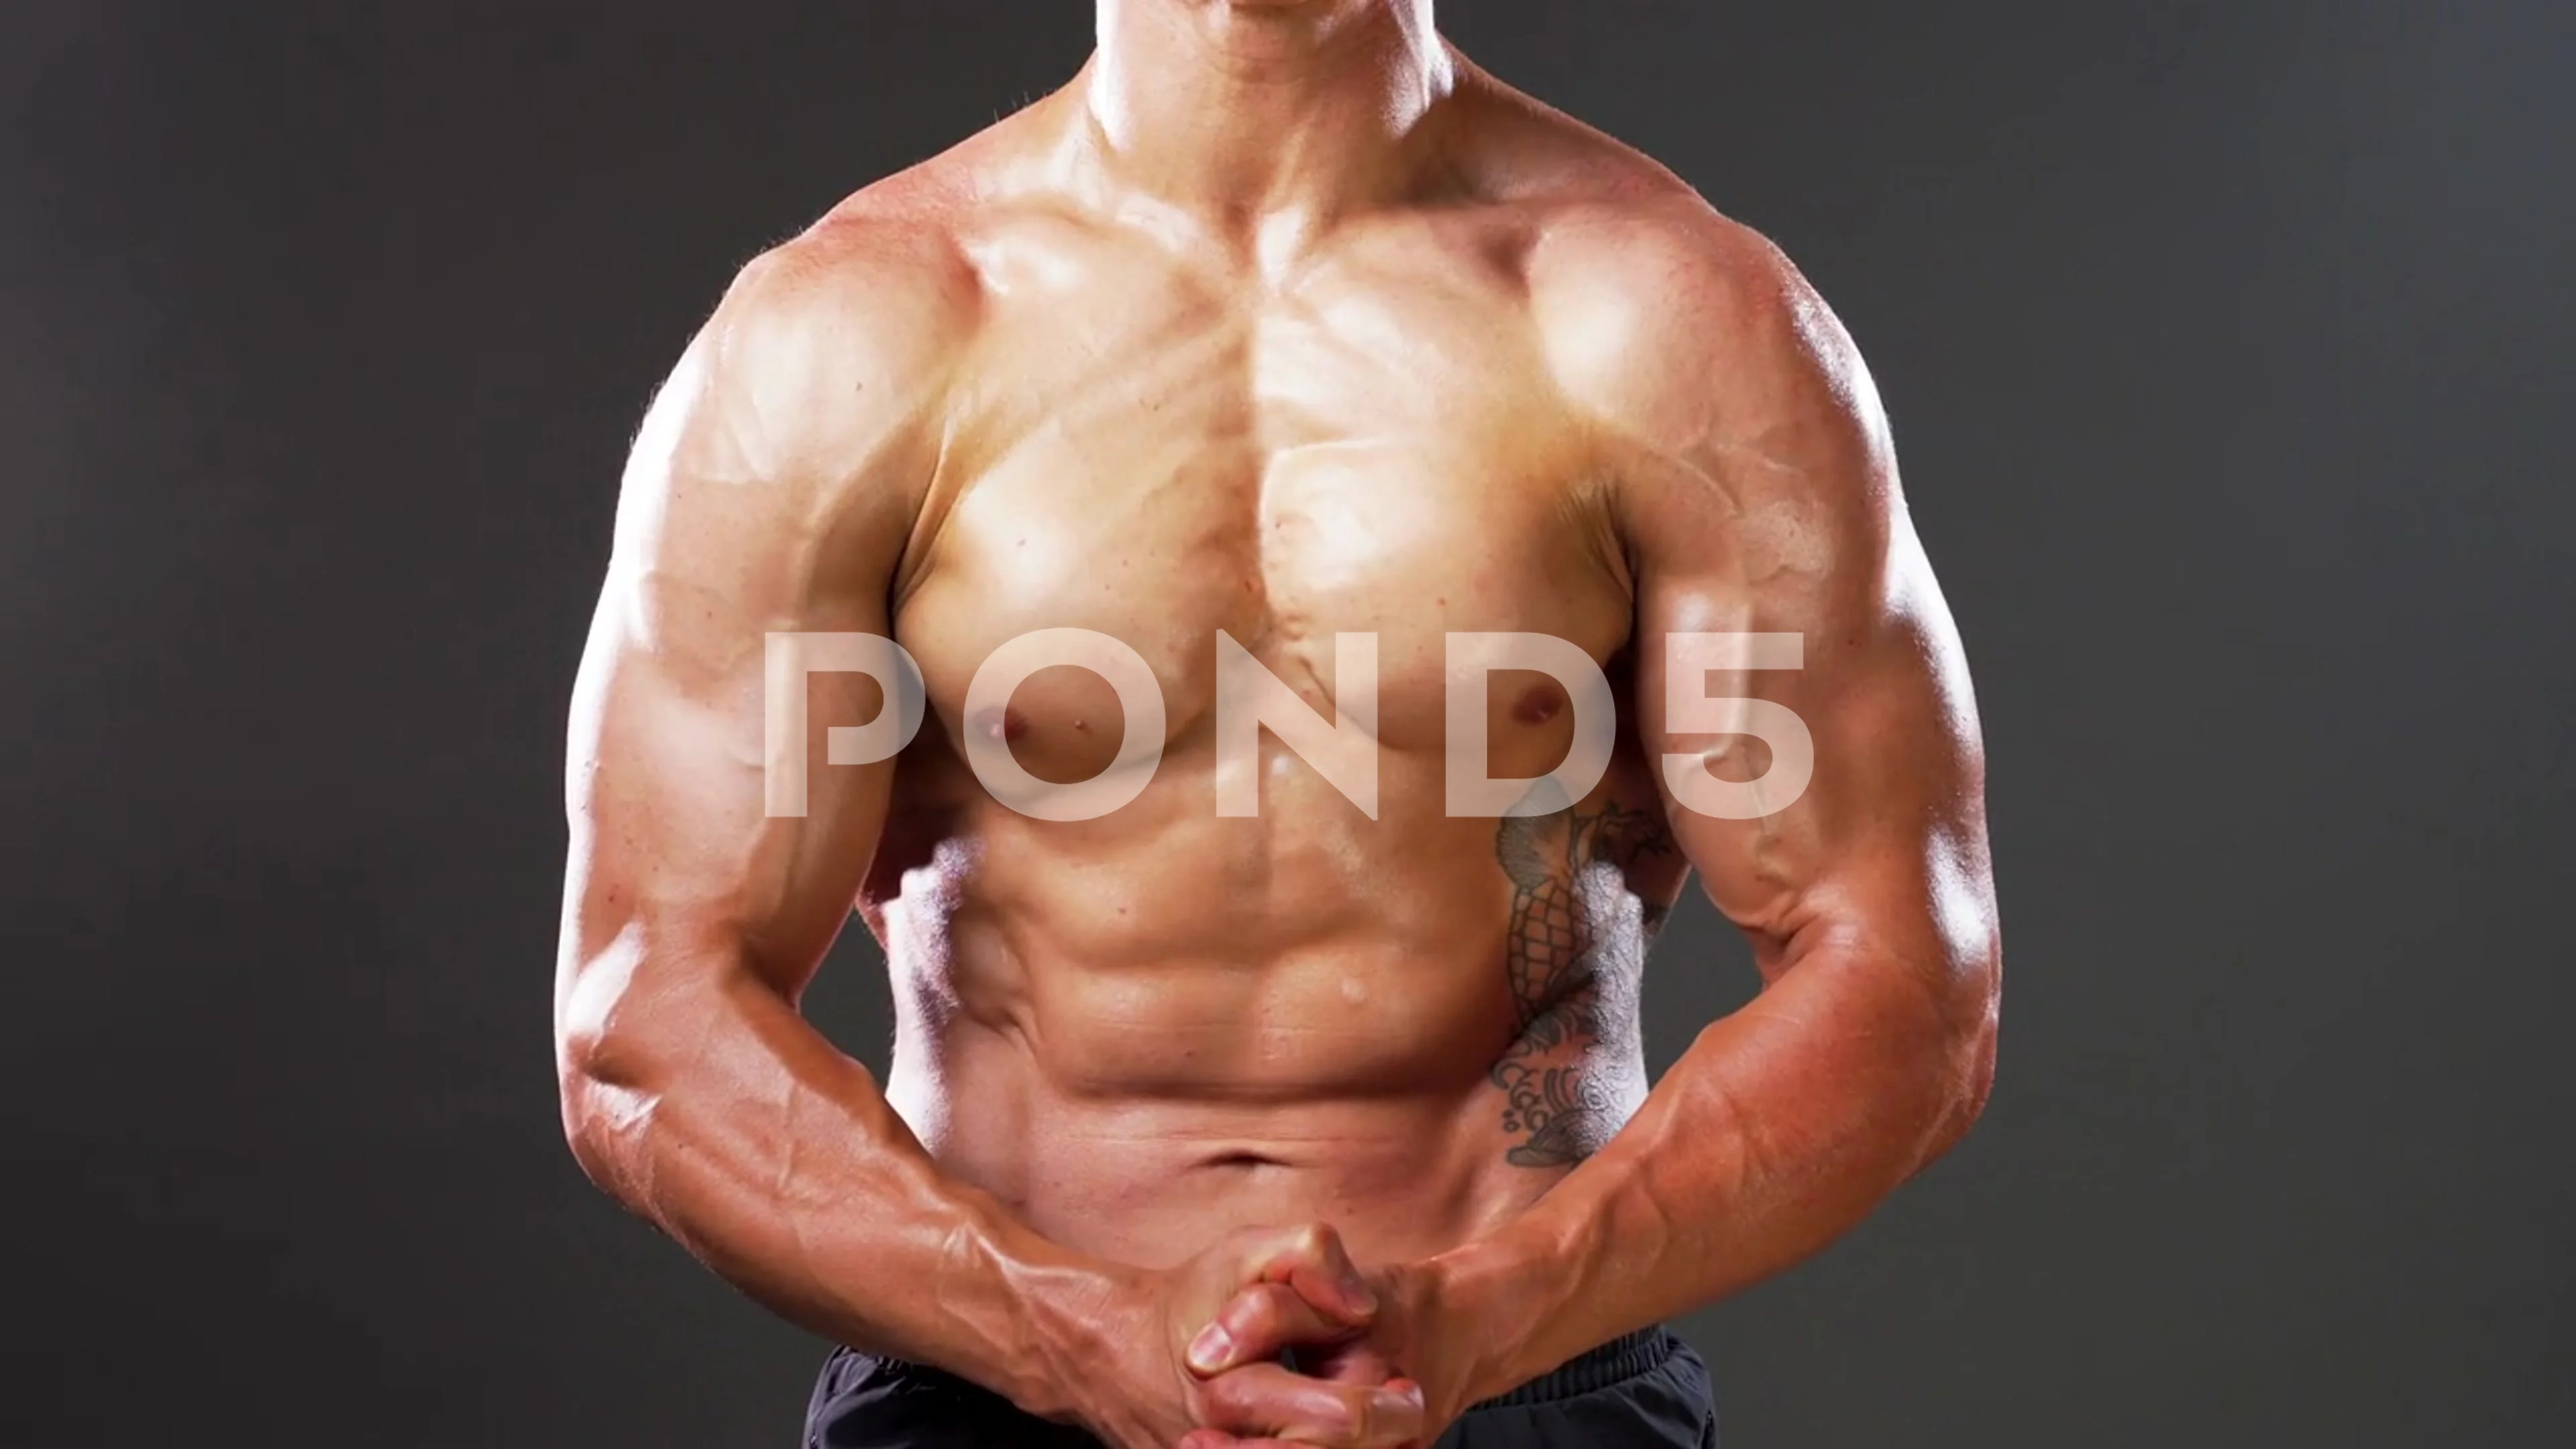 https://images.pond5.com/shirtless-muscular-man-flexing-his-footage-165420960_prevstill.jpeg